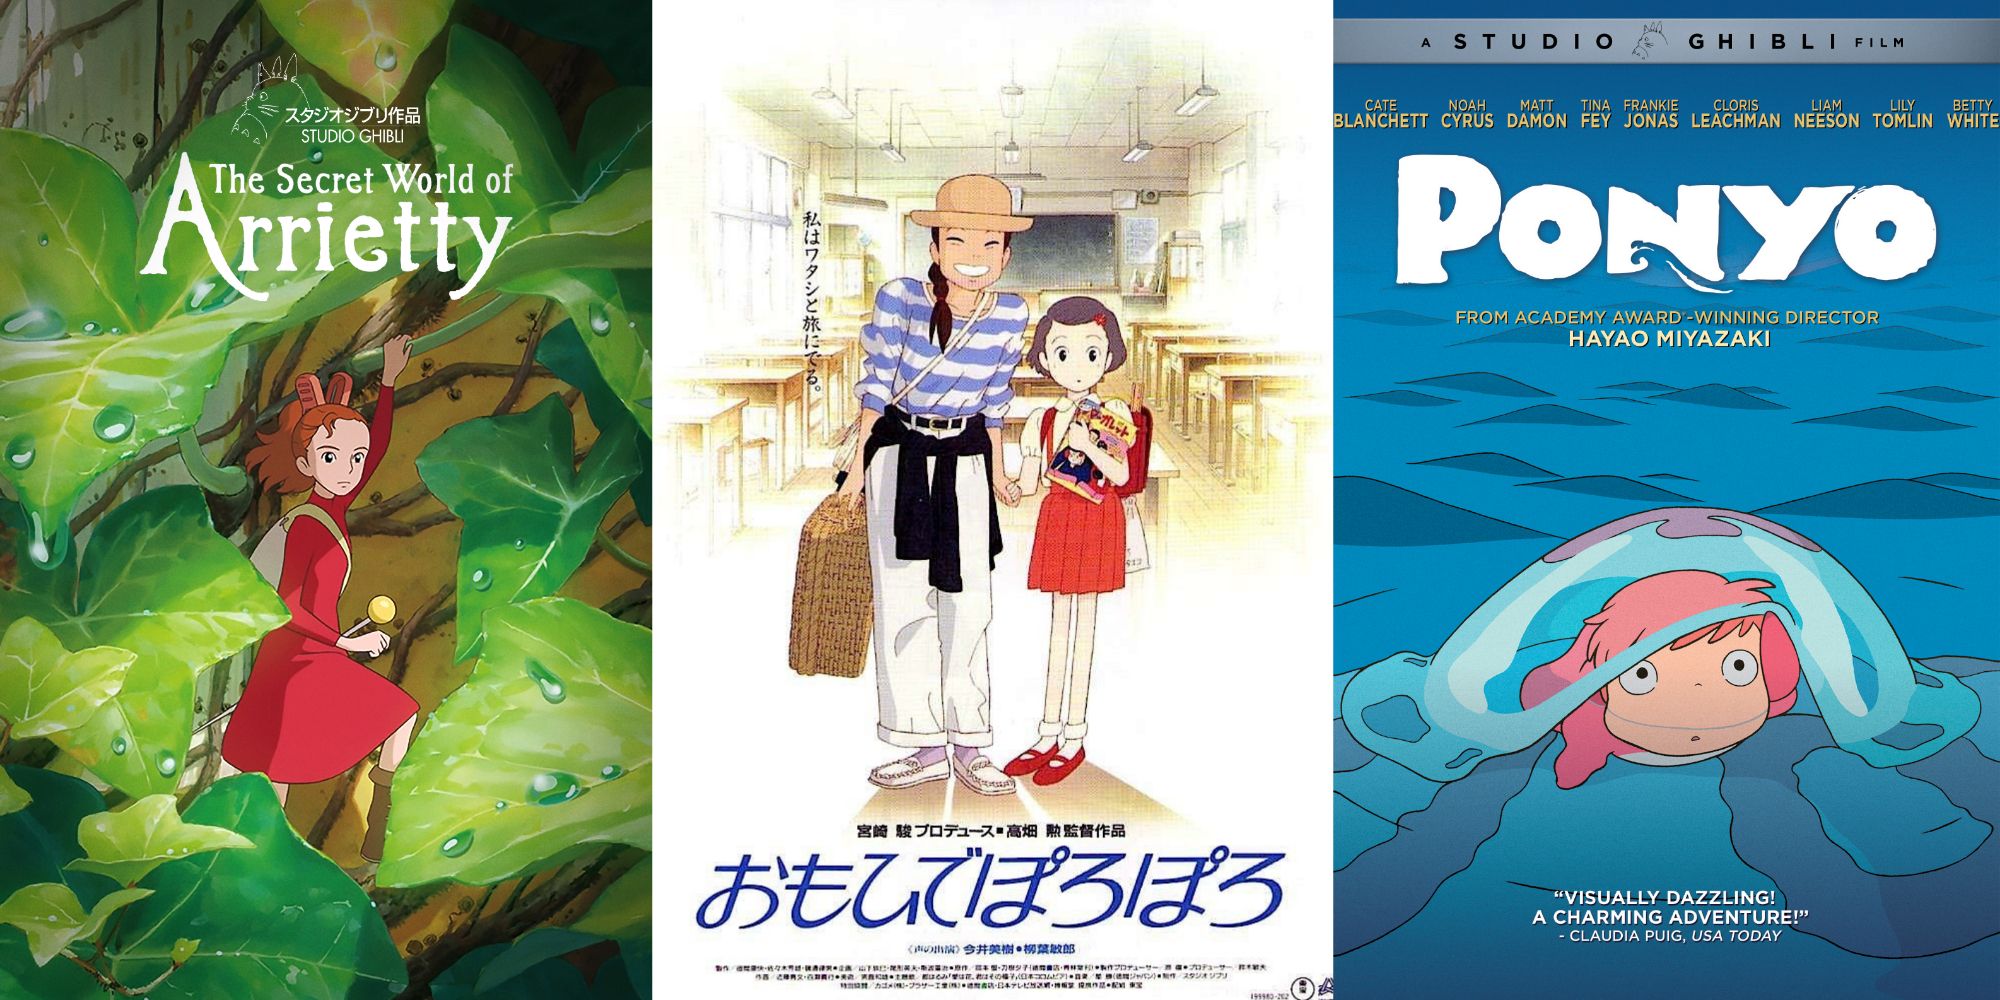 The Lowest Rated Studio Ghibli Films, According To IMDb